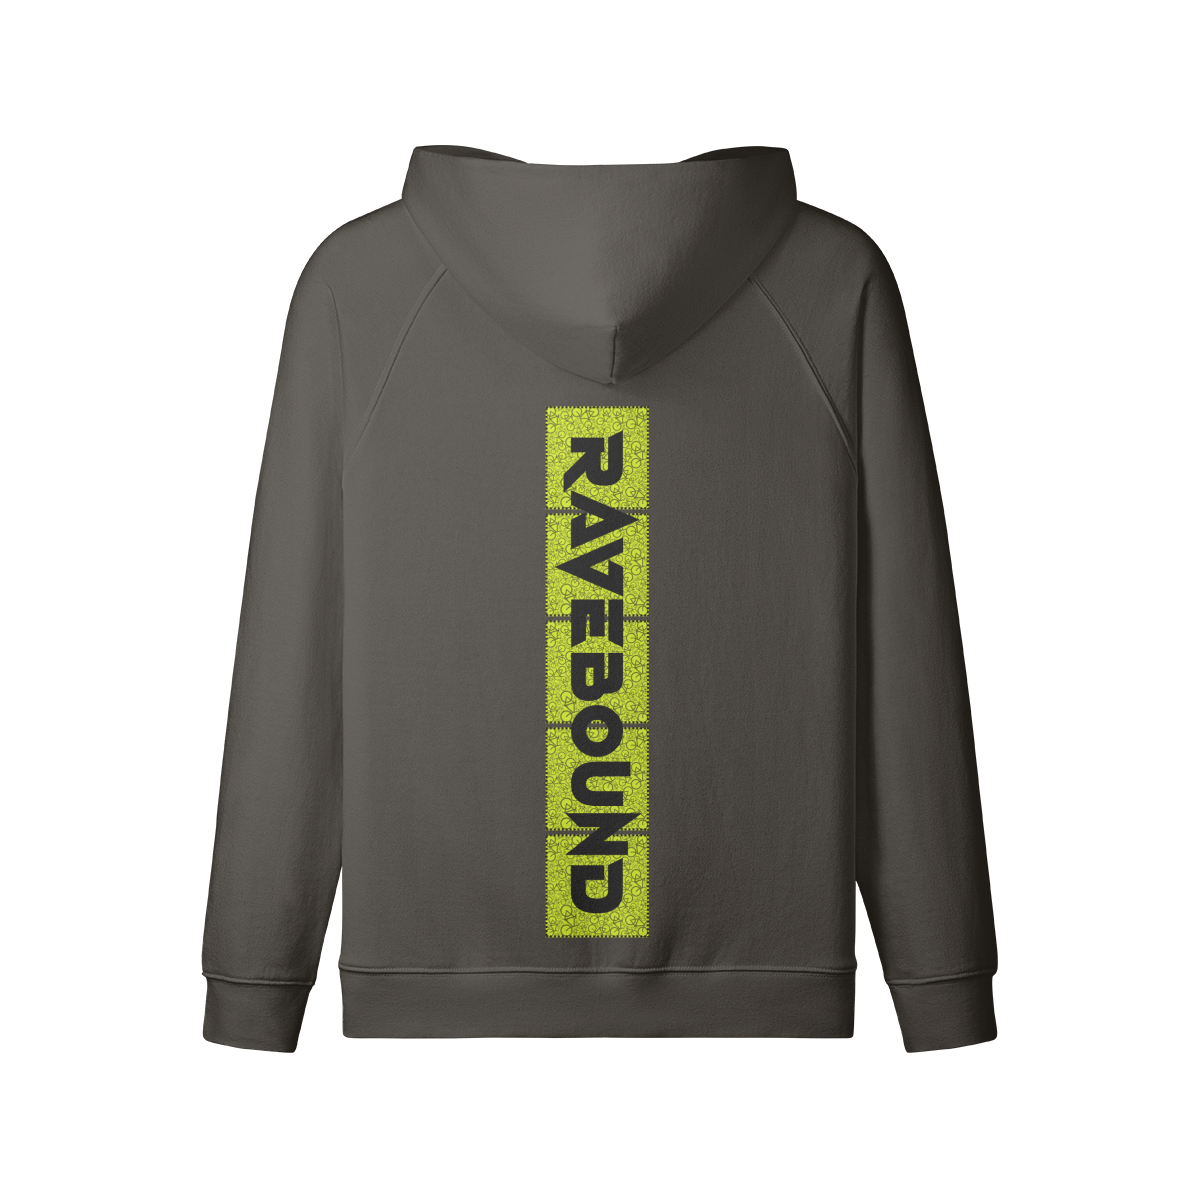 RAVEBOUND (BACK PRINT) - Unisex Fleece-lined Full-zip Hoodie